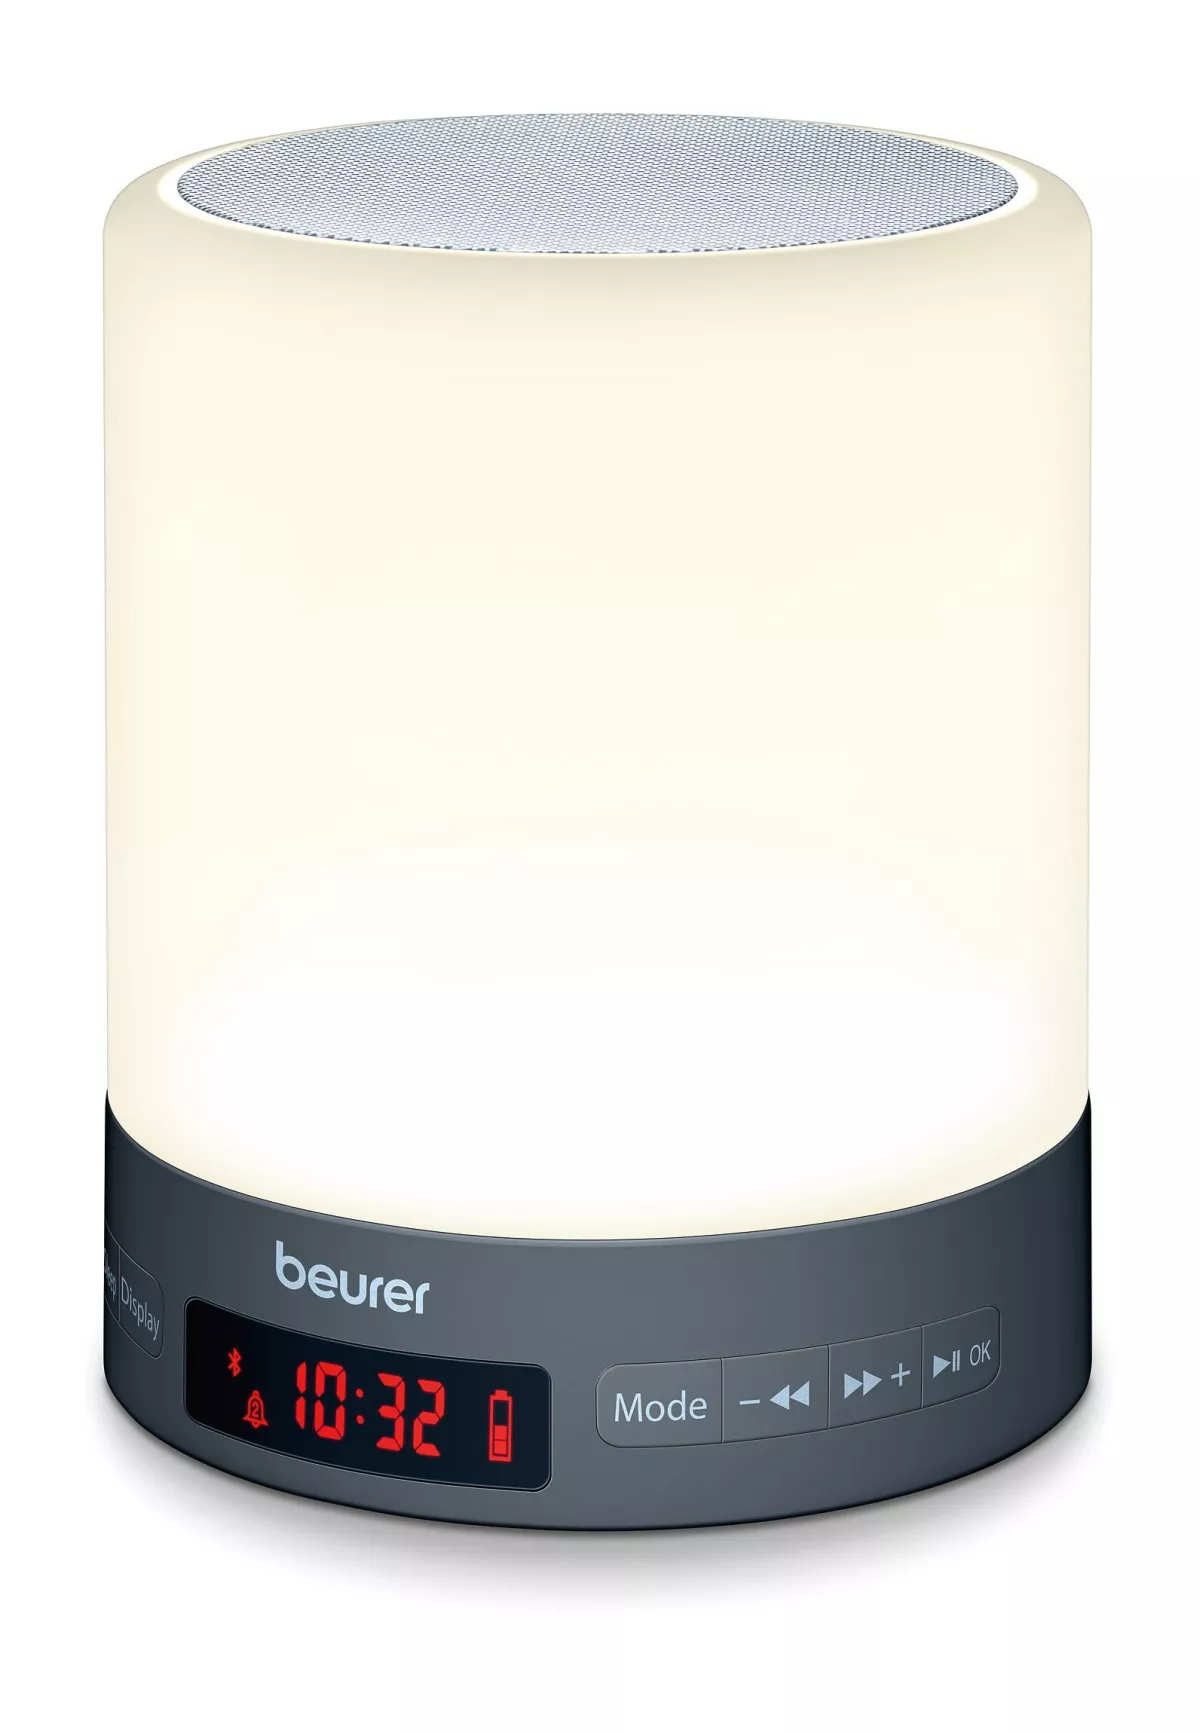 #1 - Beurer WL 50 Wake Up Light